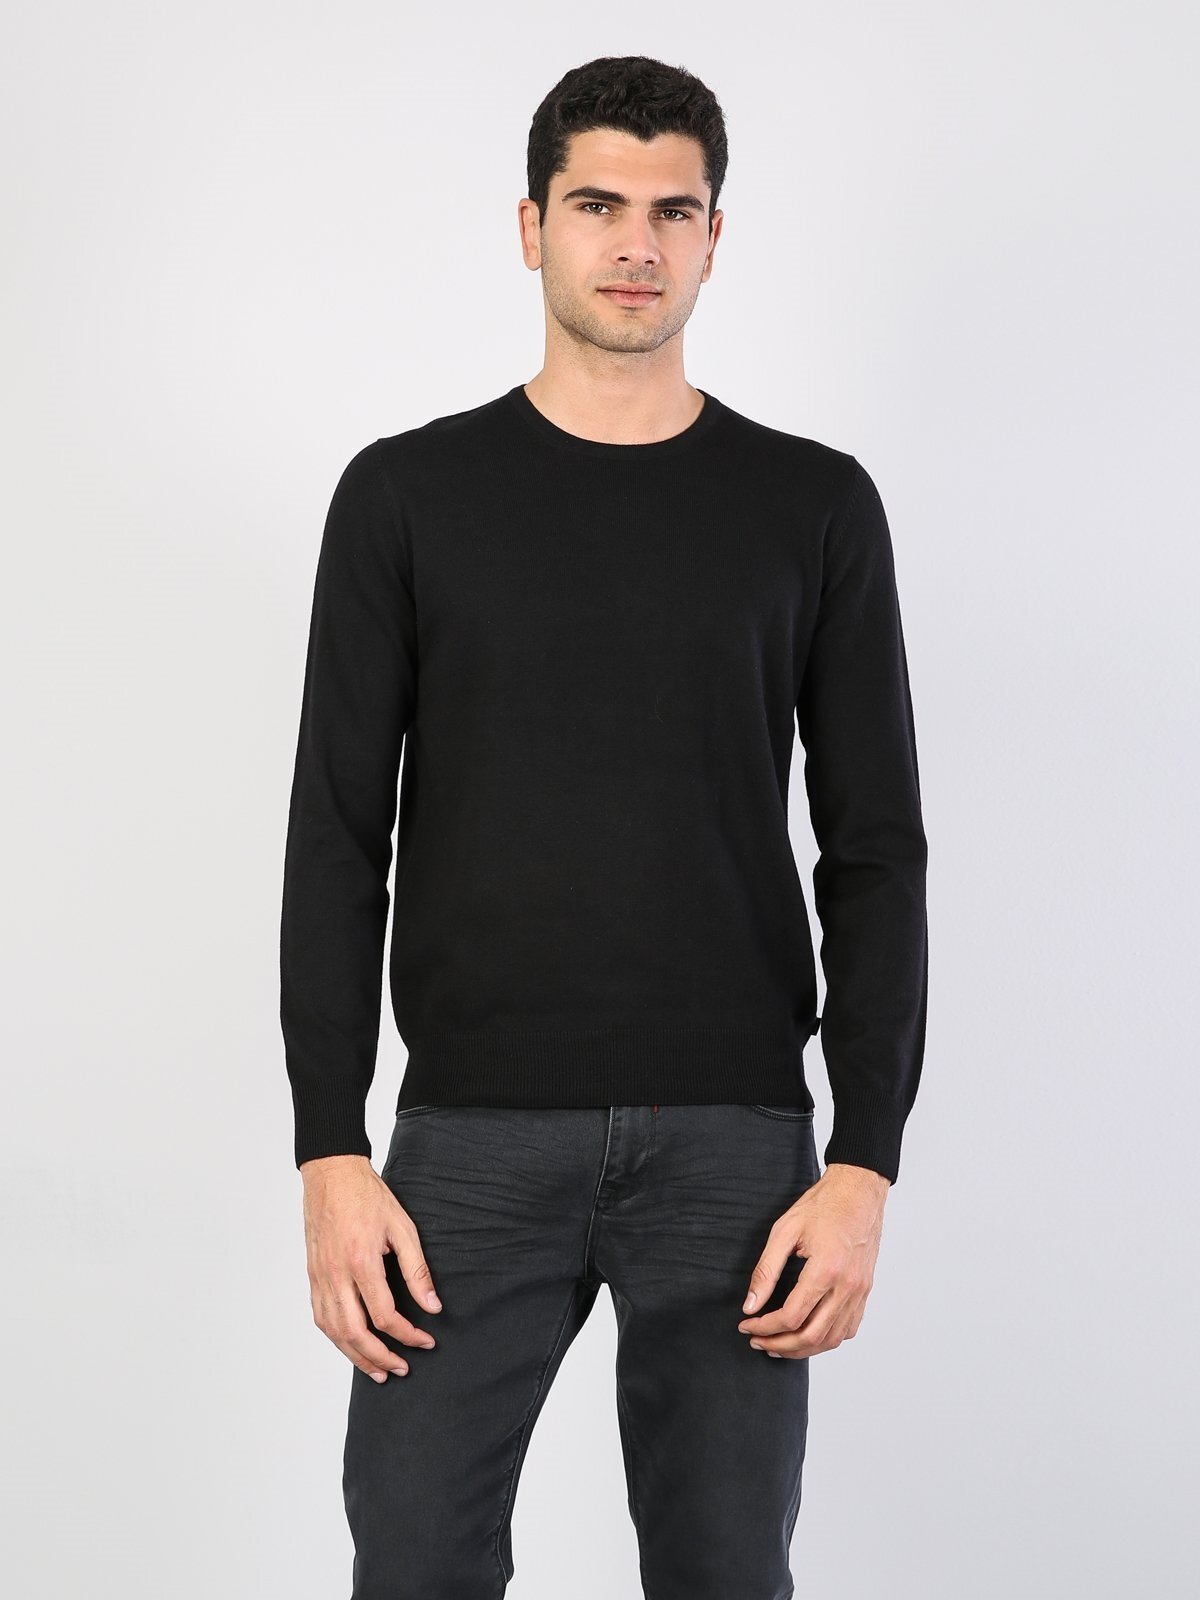 Colins Black Men Sweaters. 4